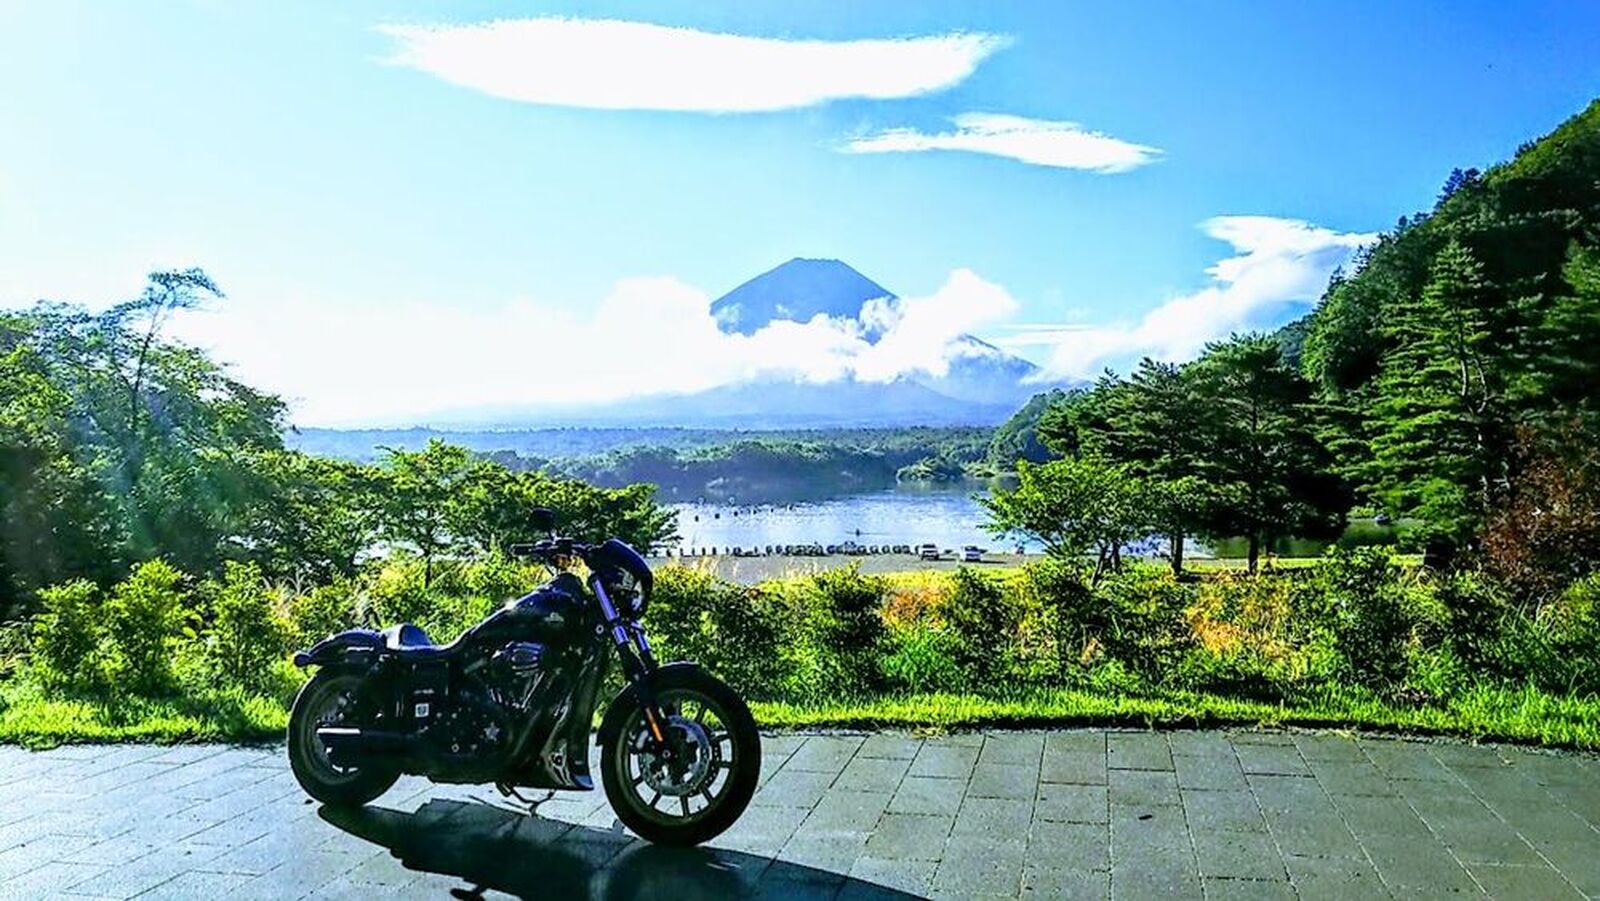 Harley Davidson Fxdls Dyna Lowrider S 富士五湖二つ目 精進湖 へ 薩た峠に諏訪湖と盛り沢山ツーリング ウェビックコミュニティ